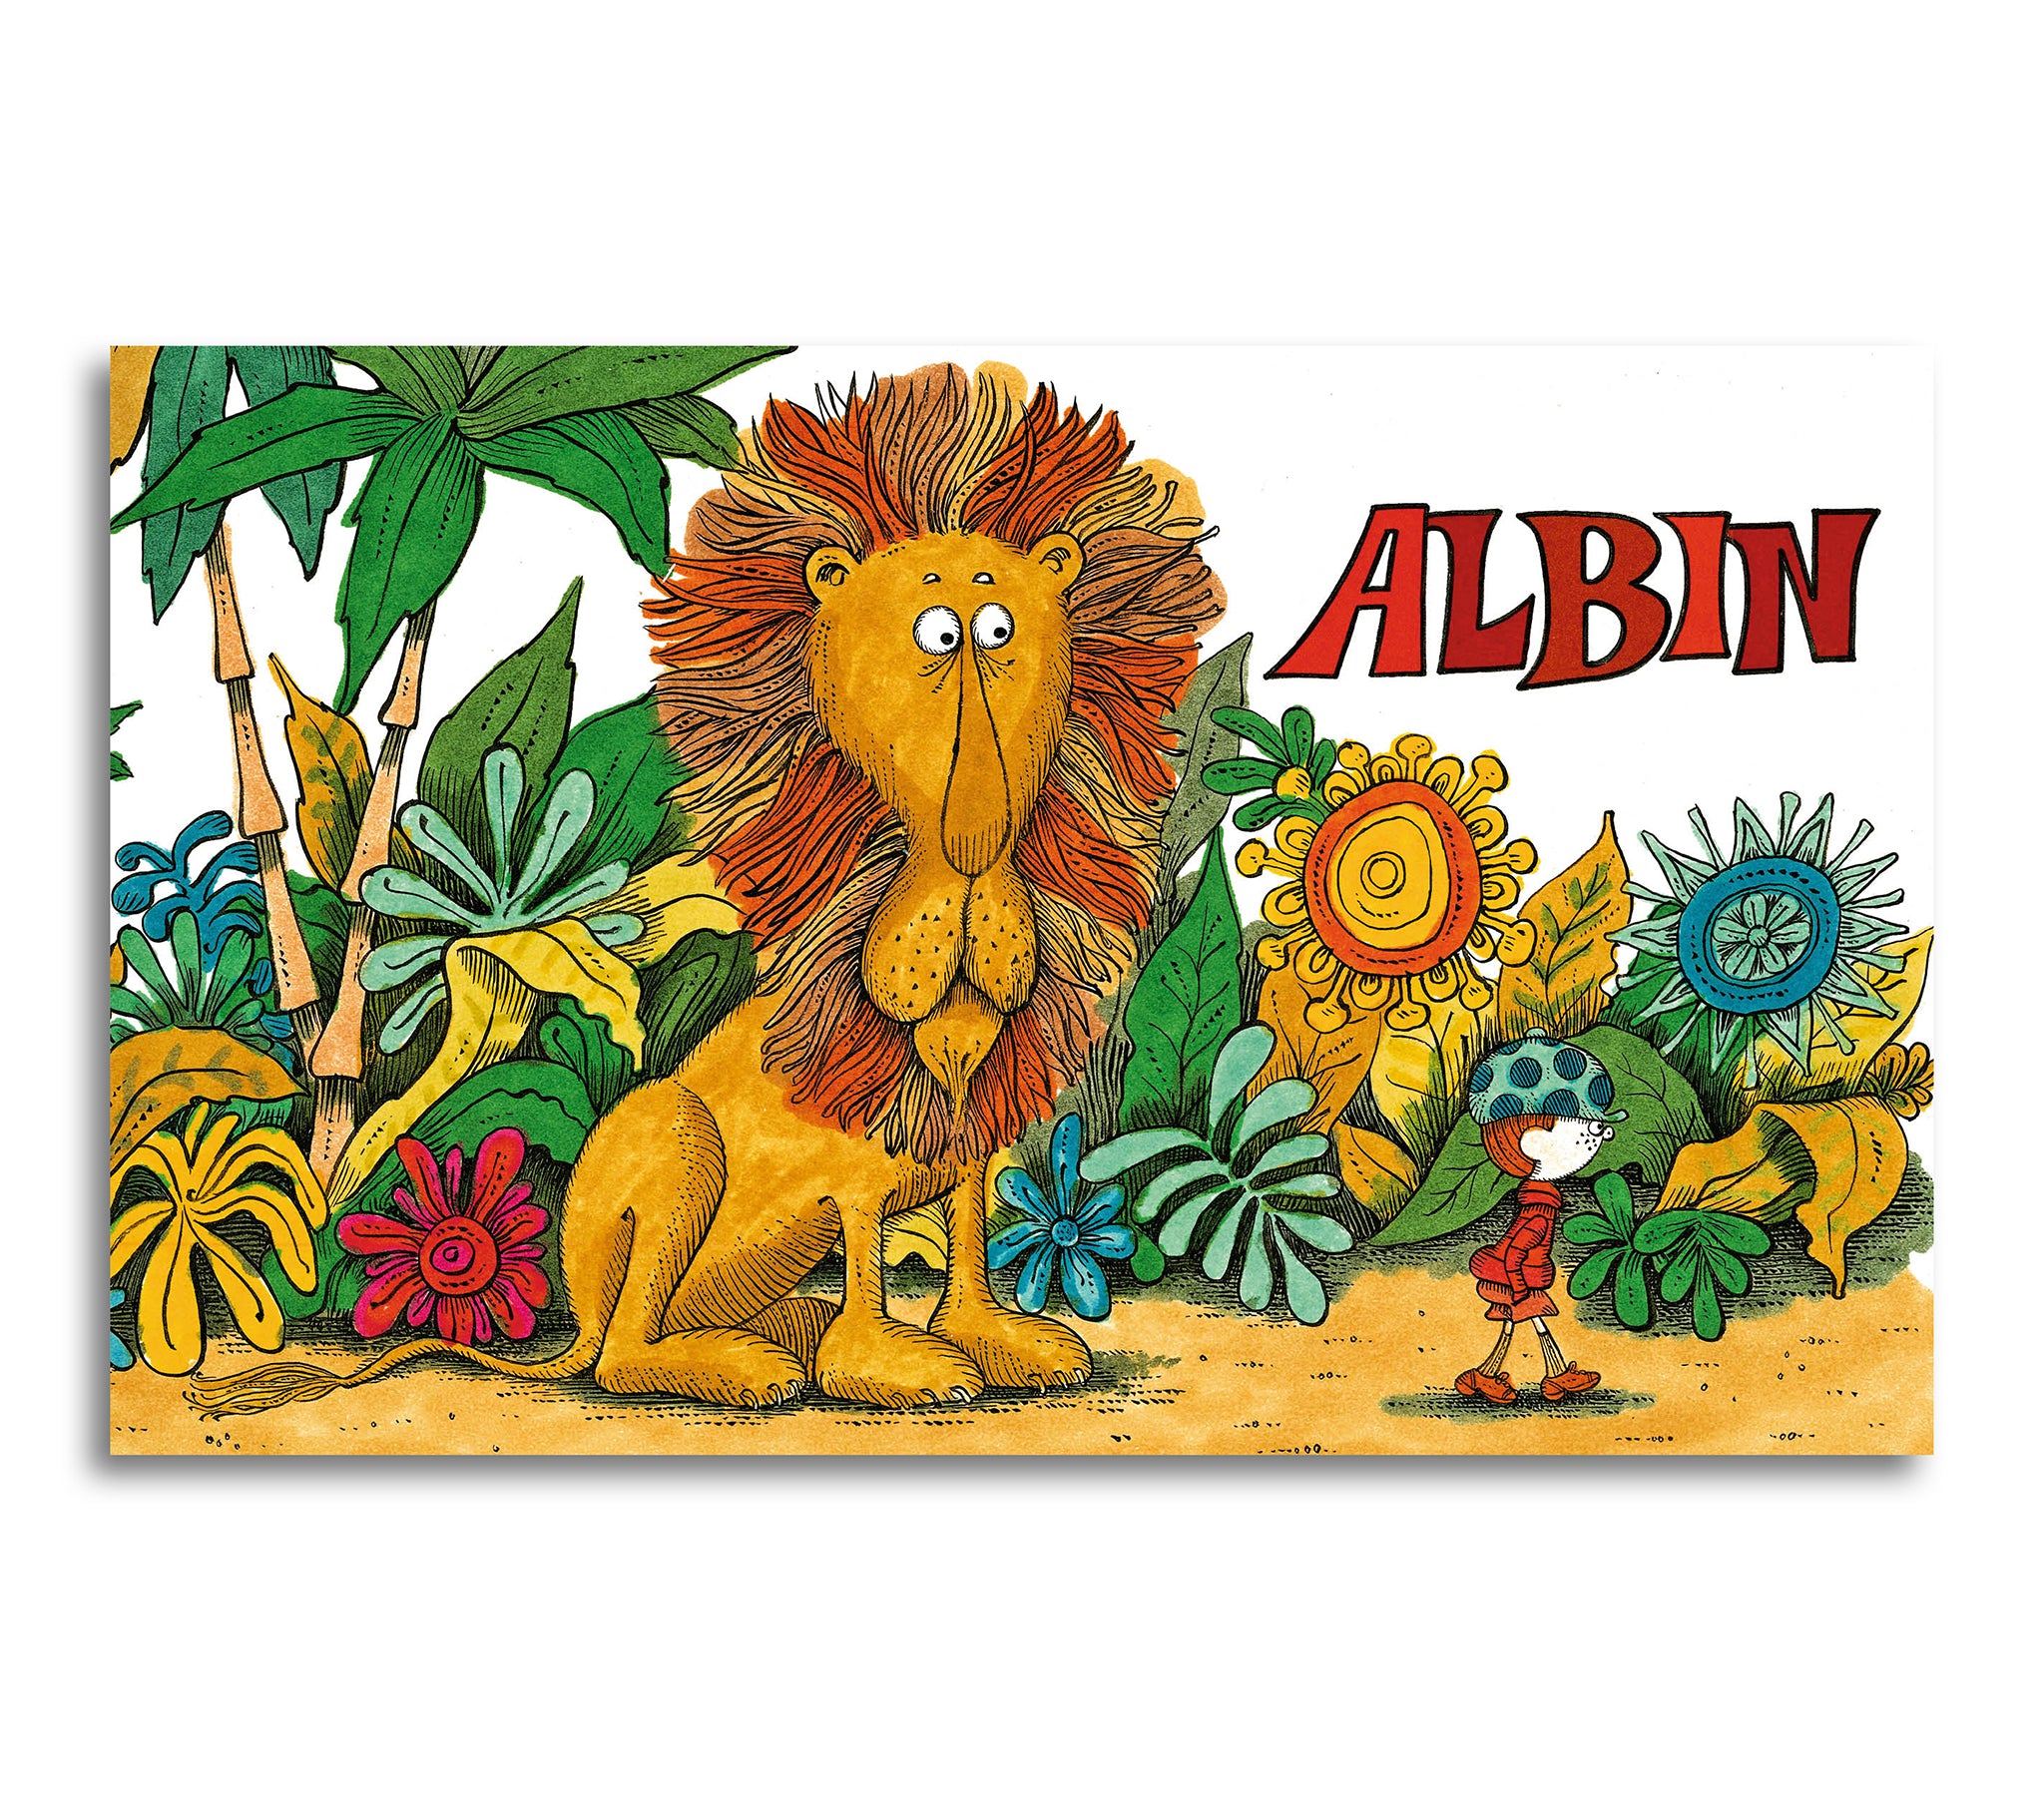 Albin is never afraid